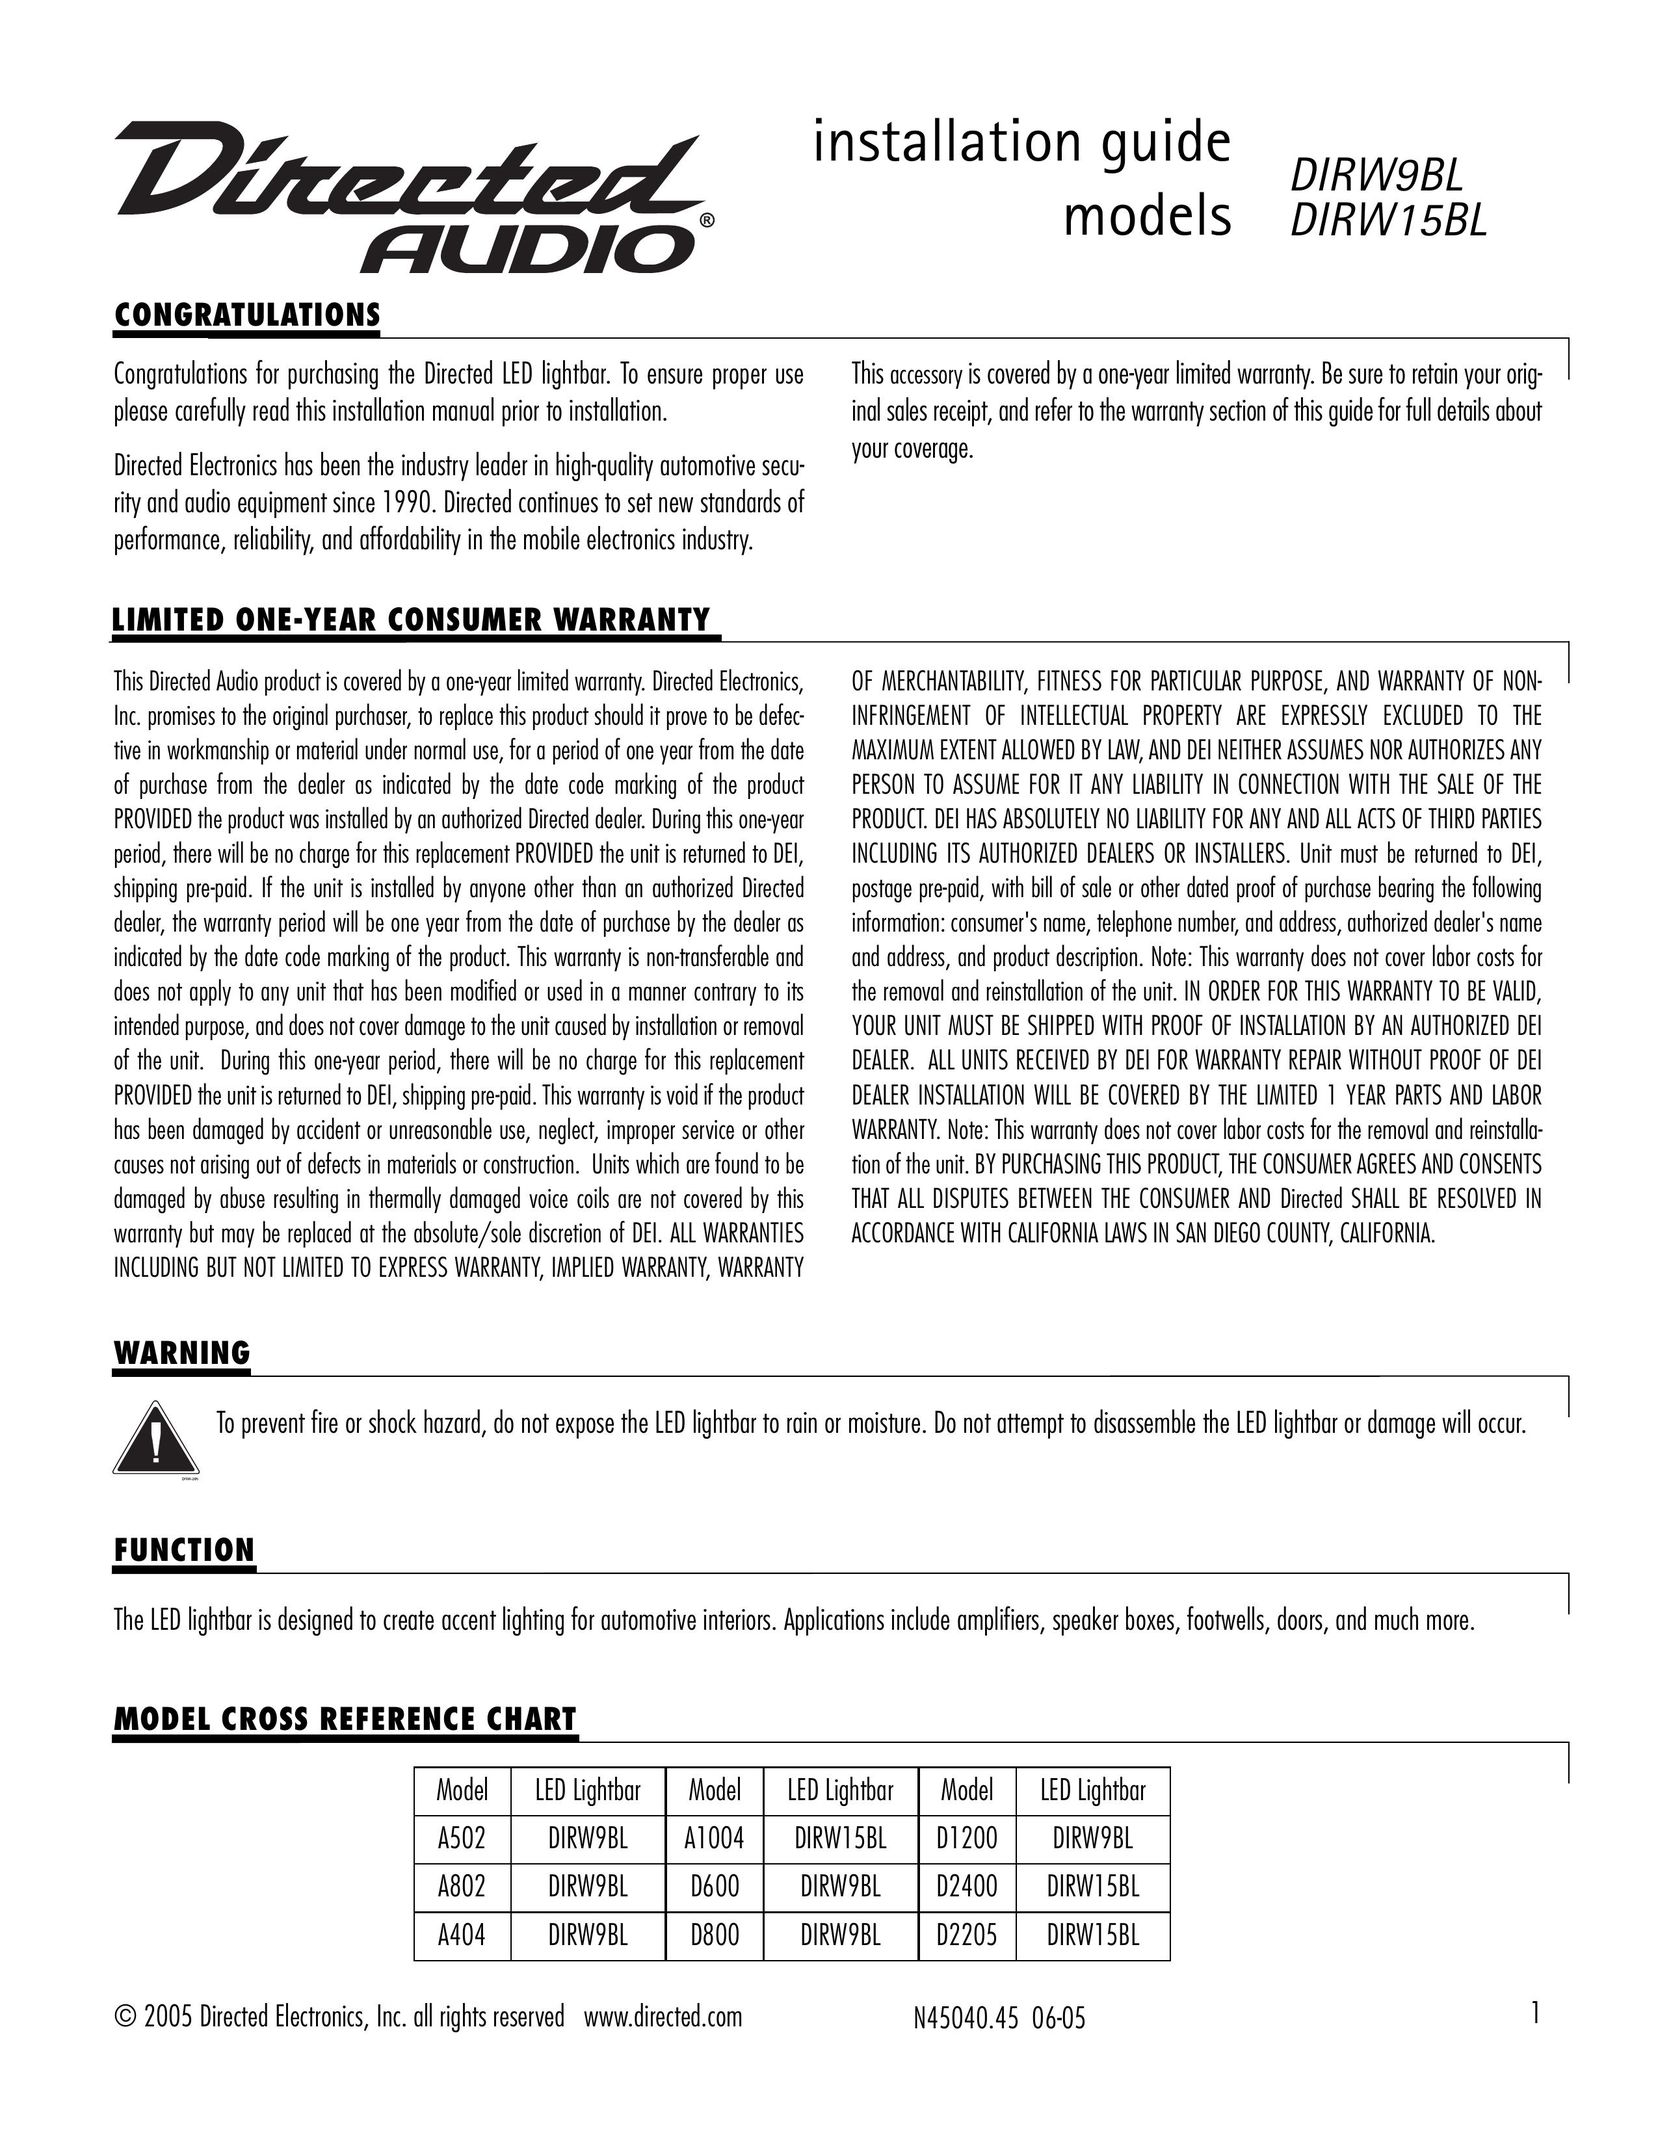 Directed Audio DIRW15BL Indoor Furnishings User Manual